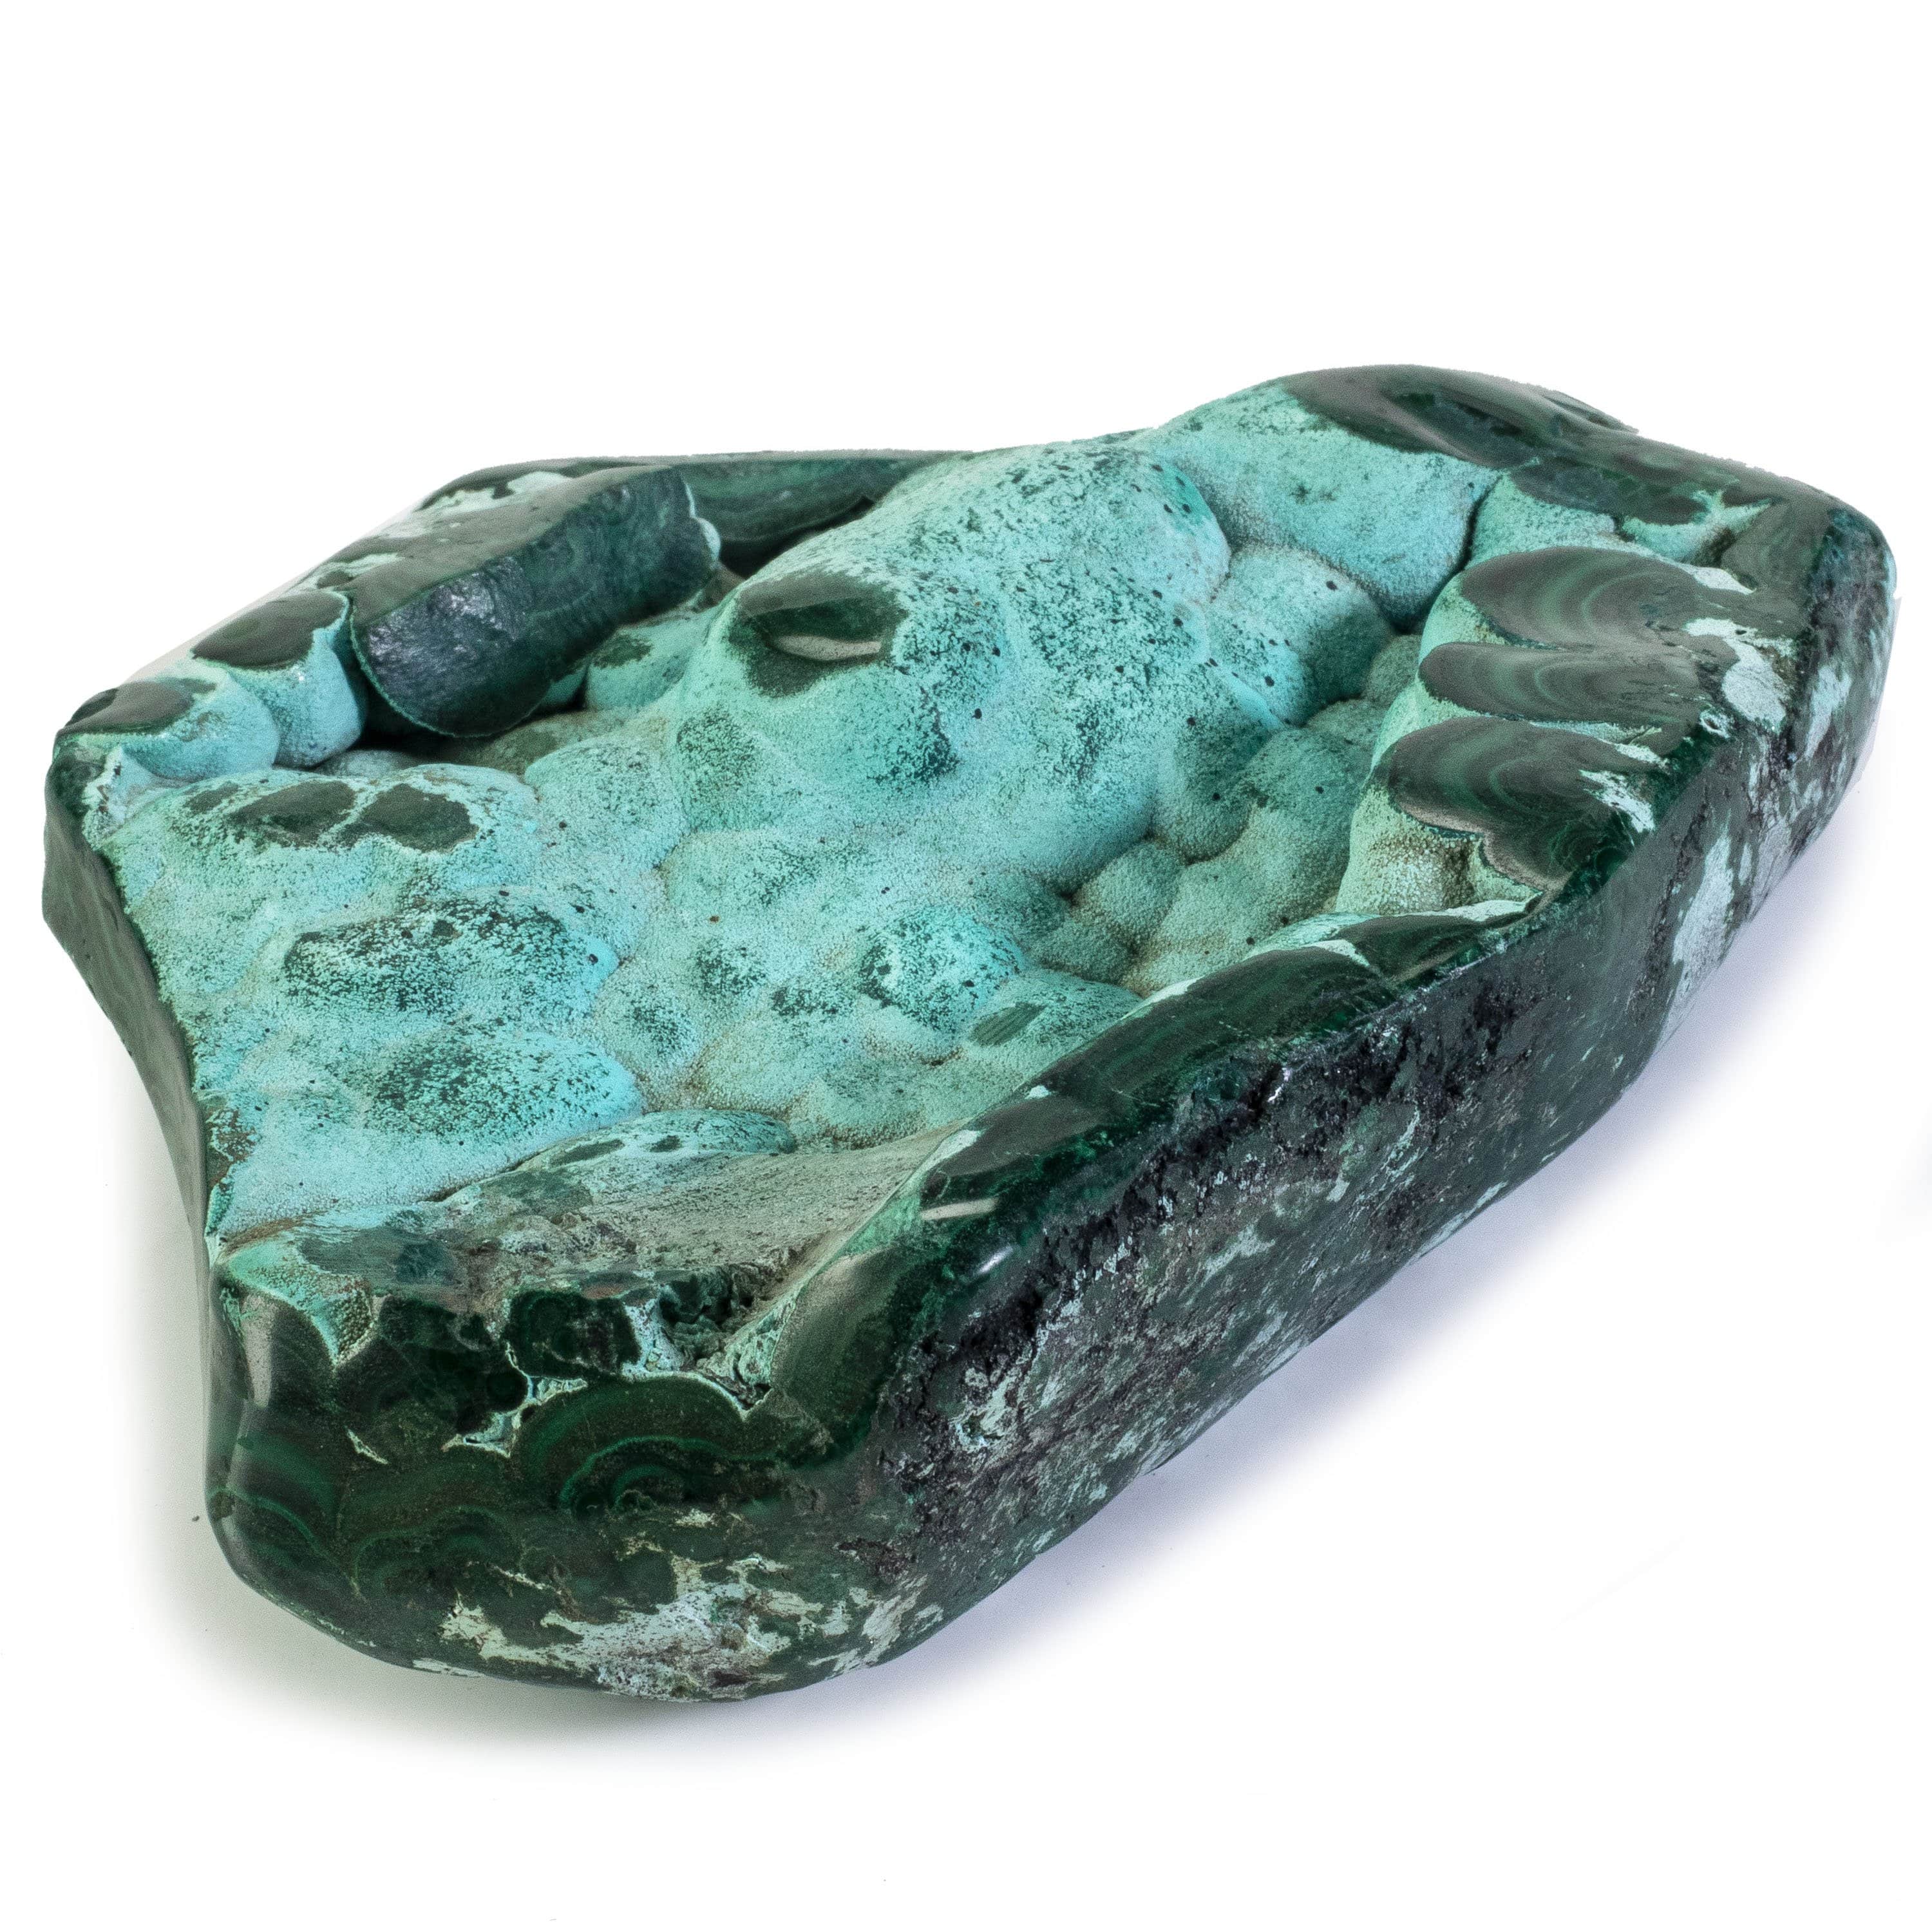 Kalifano Malachite Rare Natural Green Malachite with Blue Chrysocolla Freeform Specimen from Congo - 1 kg / 2.1 lbs MAC750.004